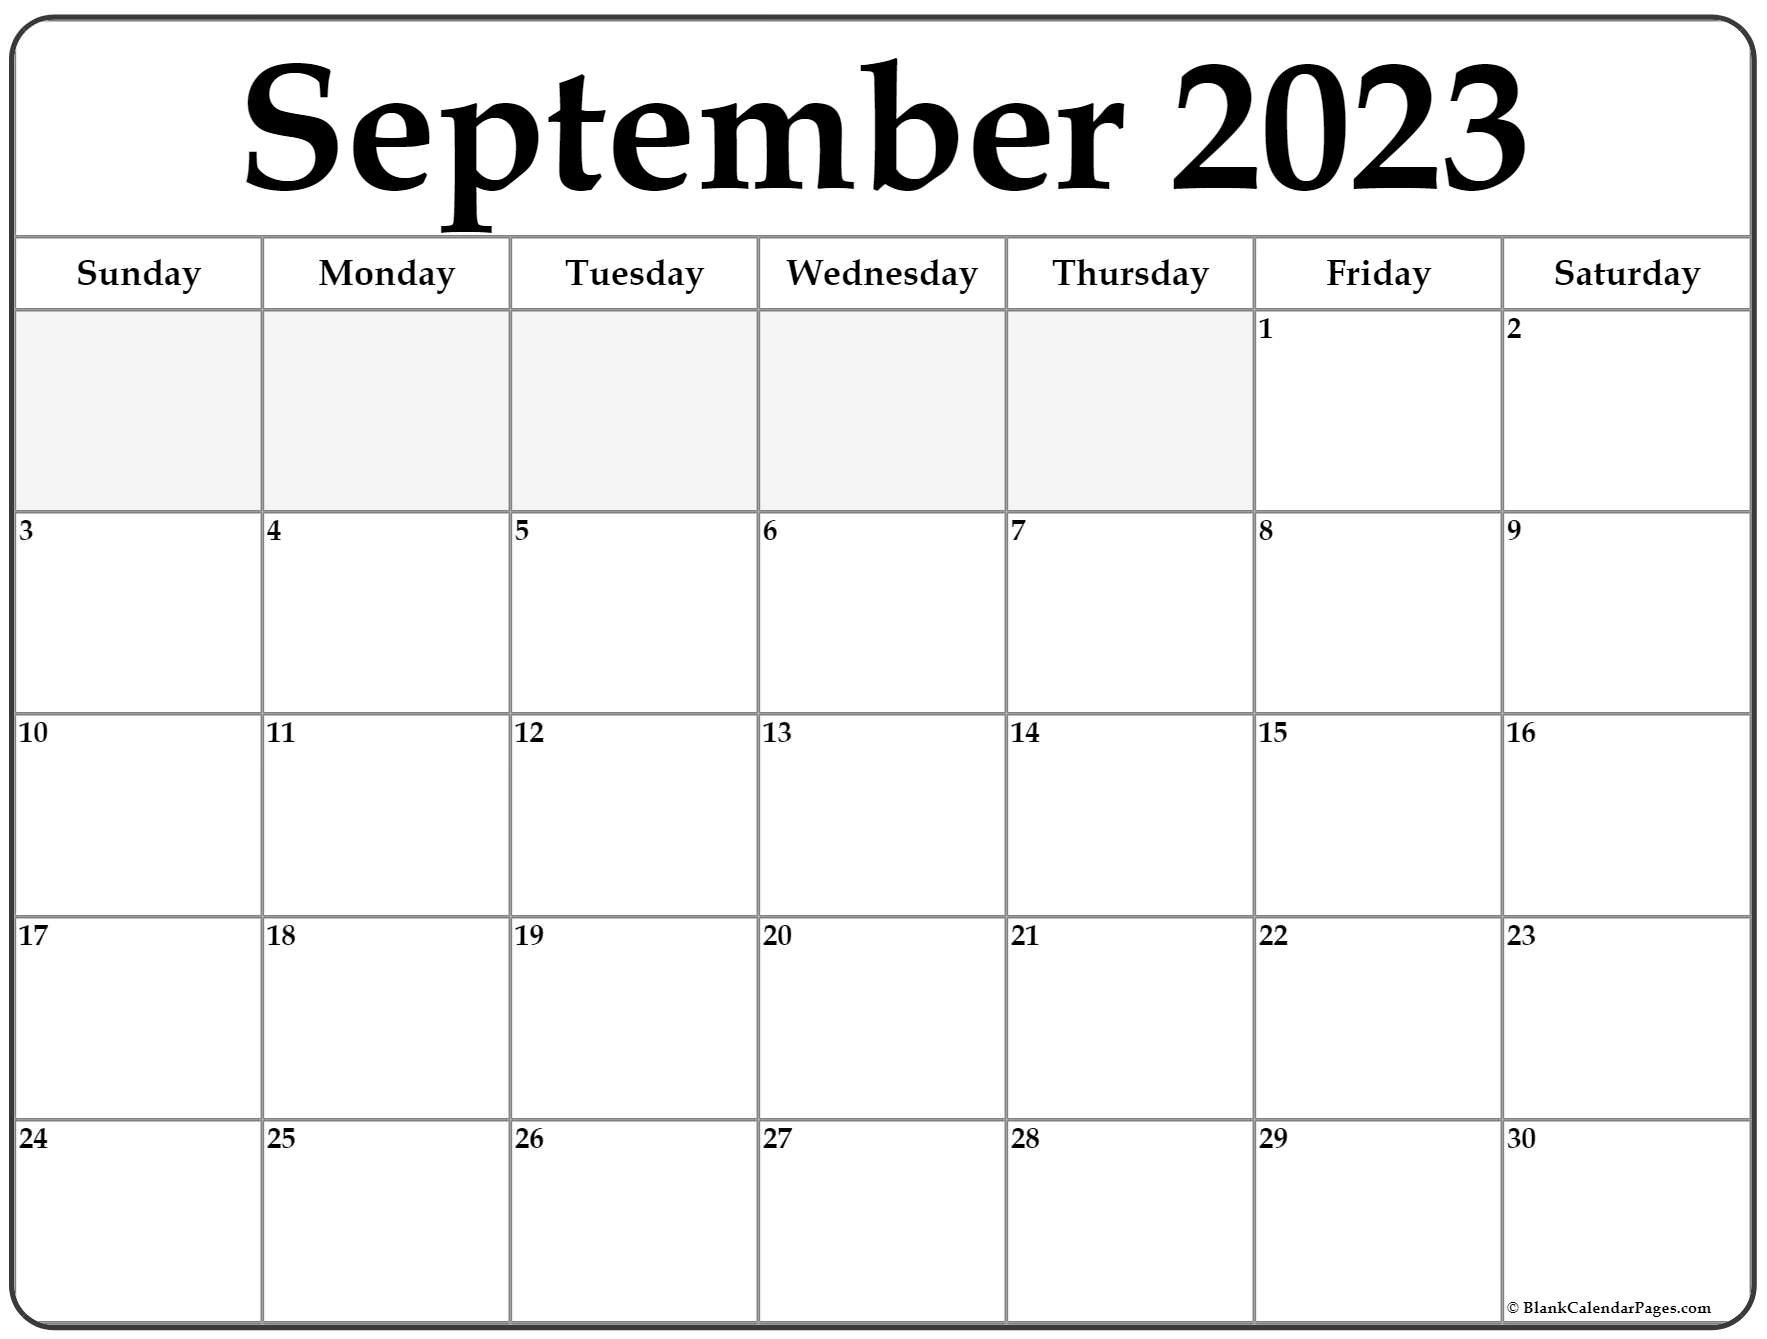 September 2023 calendar | free printable calendar templates